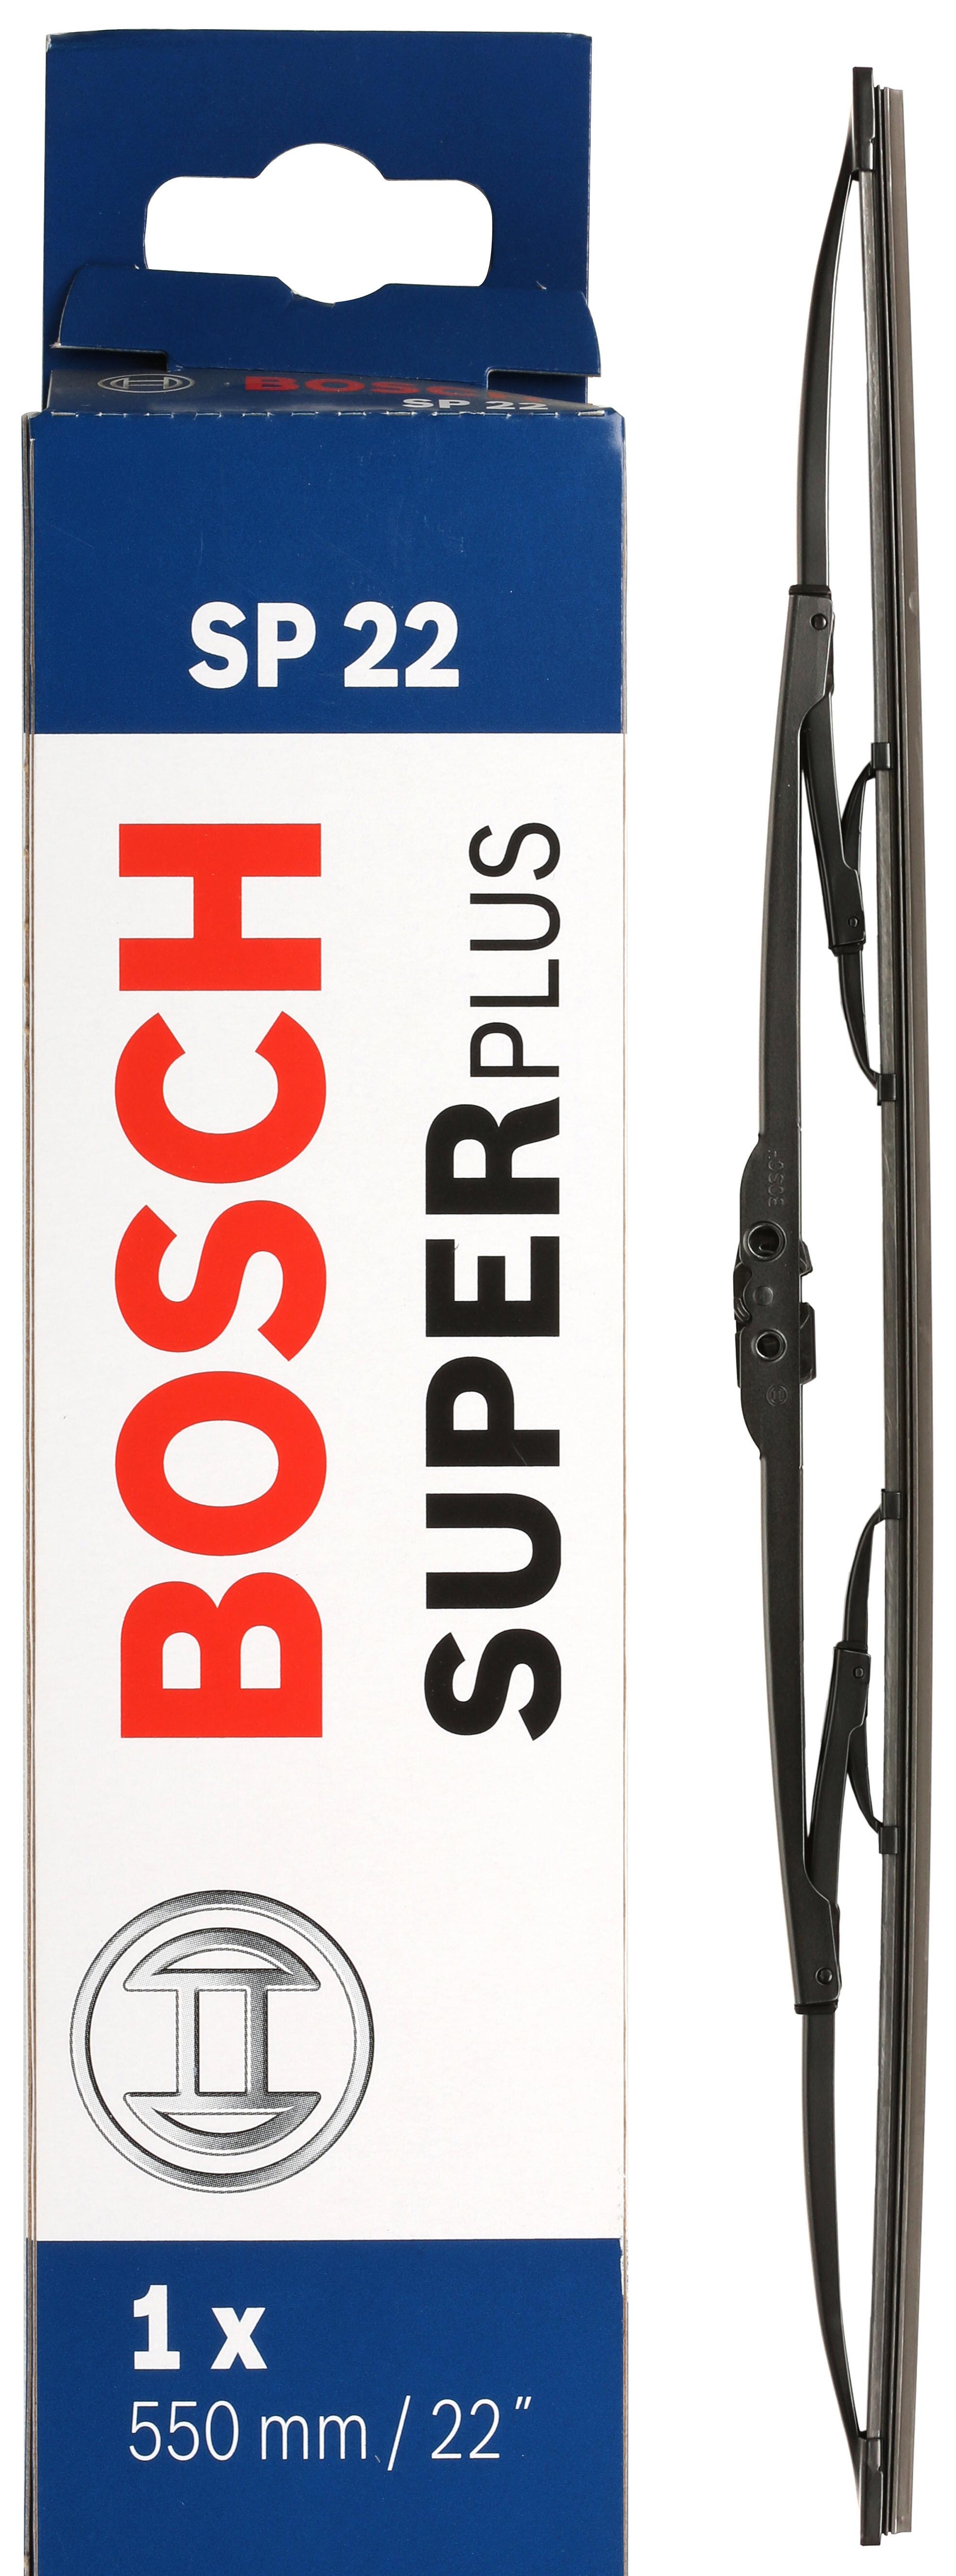 Bosch Sp22 Wiper Blade - Single